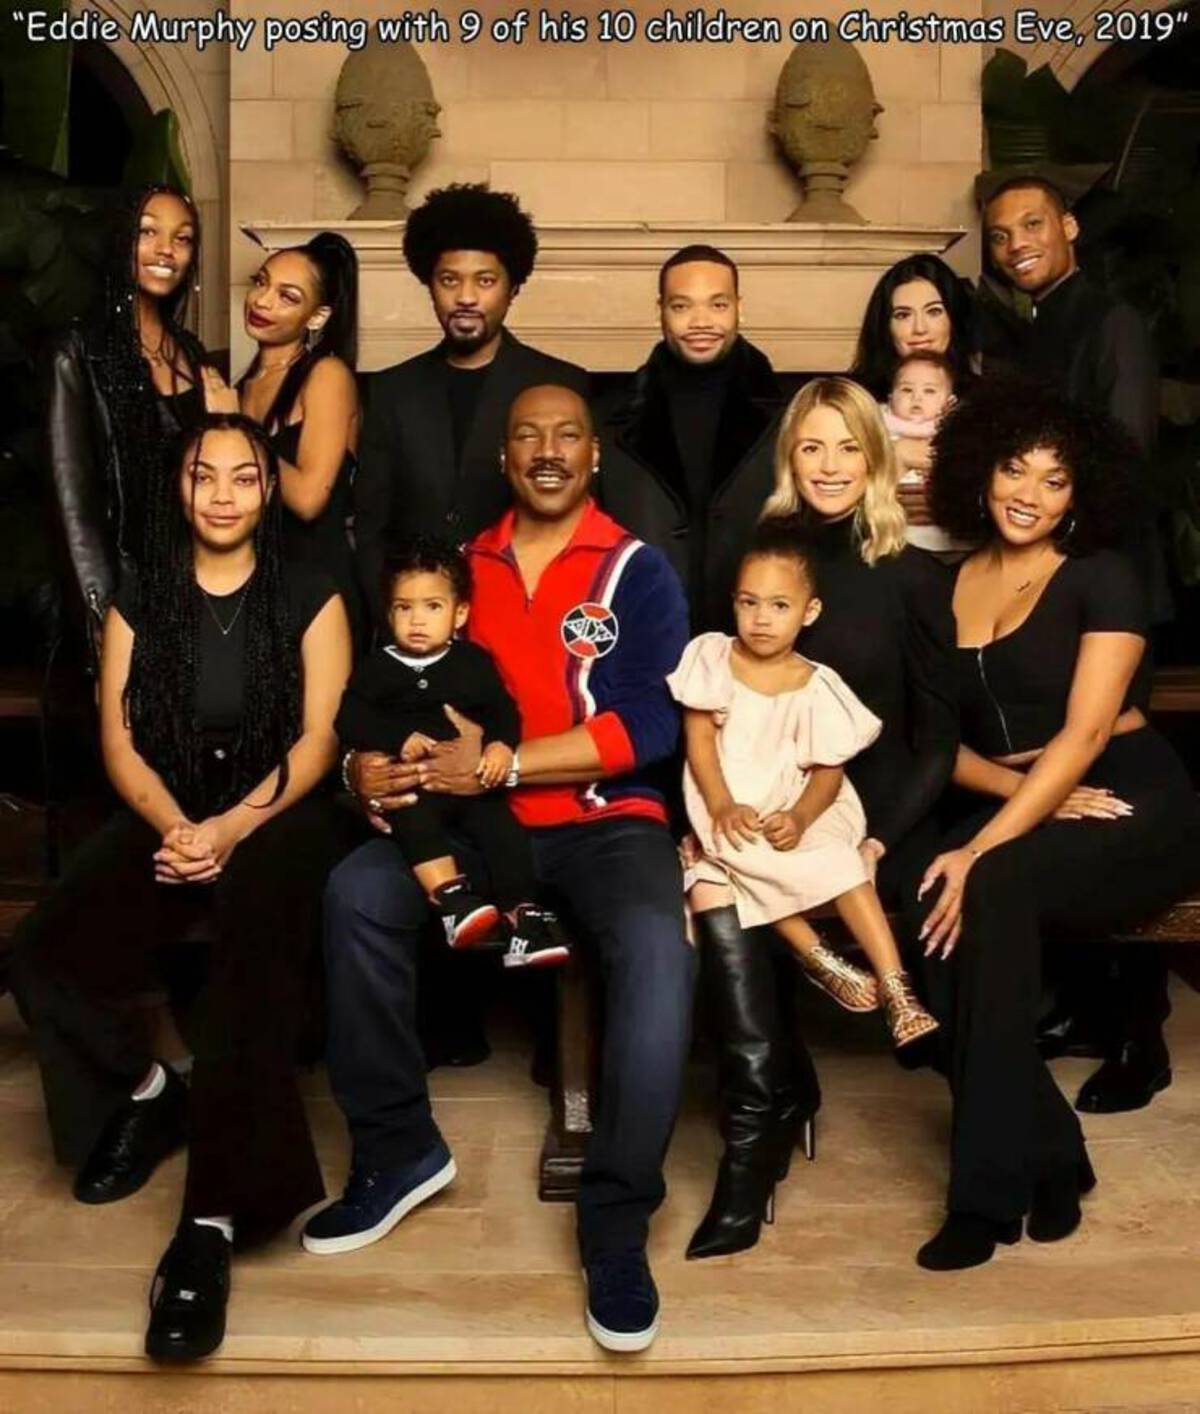 mel b and eddie murphy daughter - "Eddie Murphy posing with 9 of his 10 children on Christmas Eve, 2019"